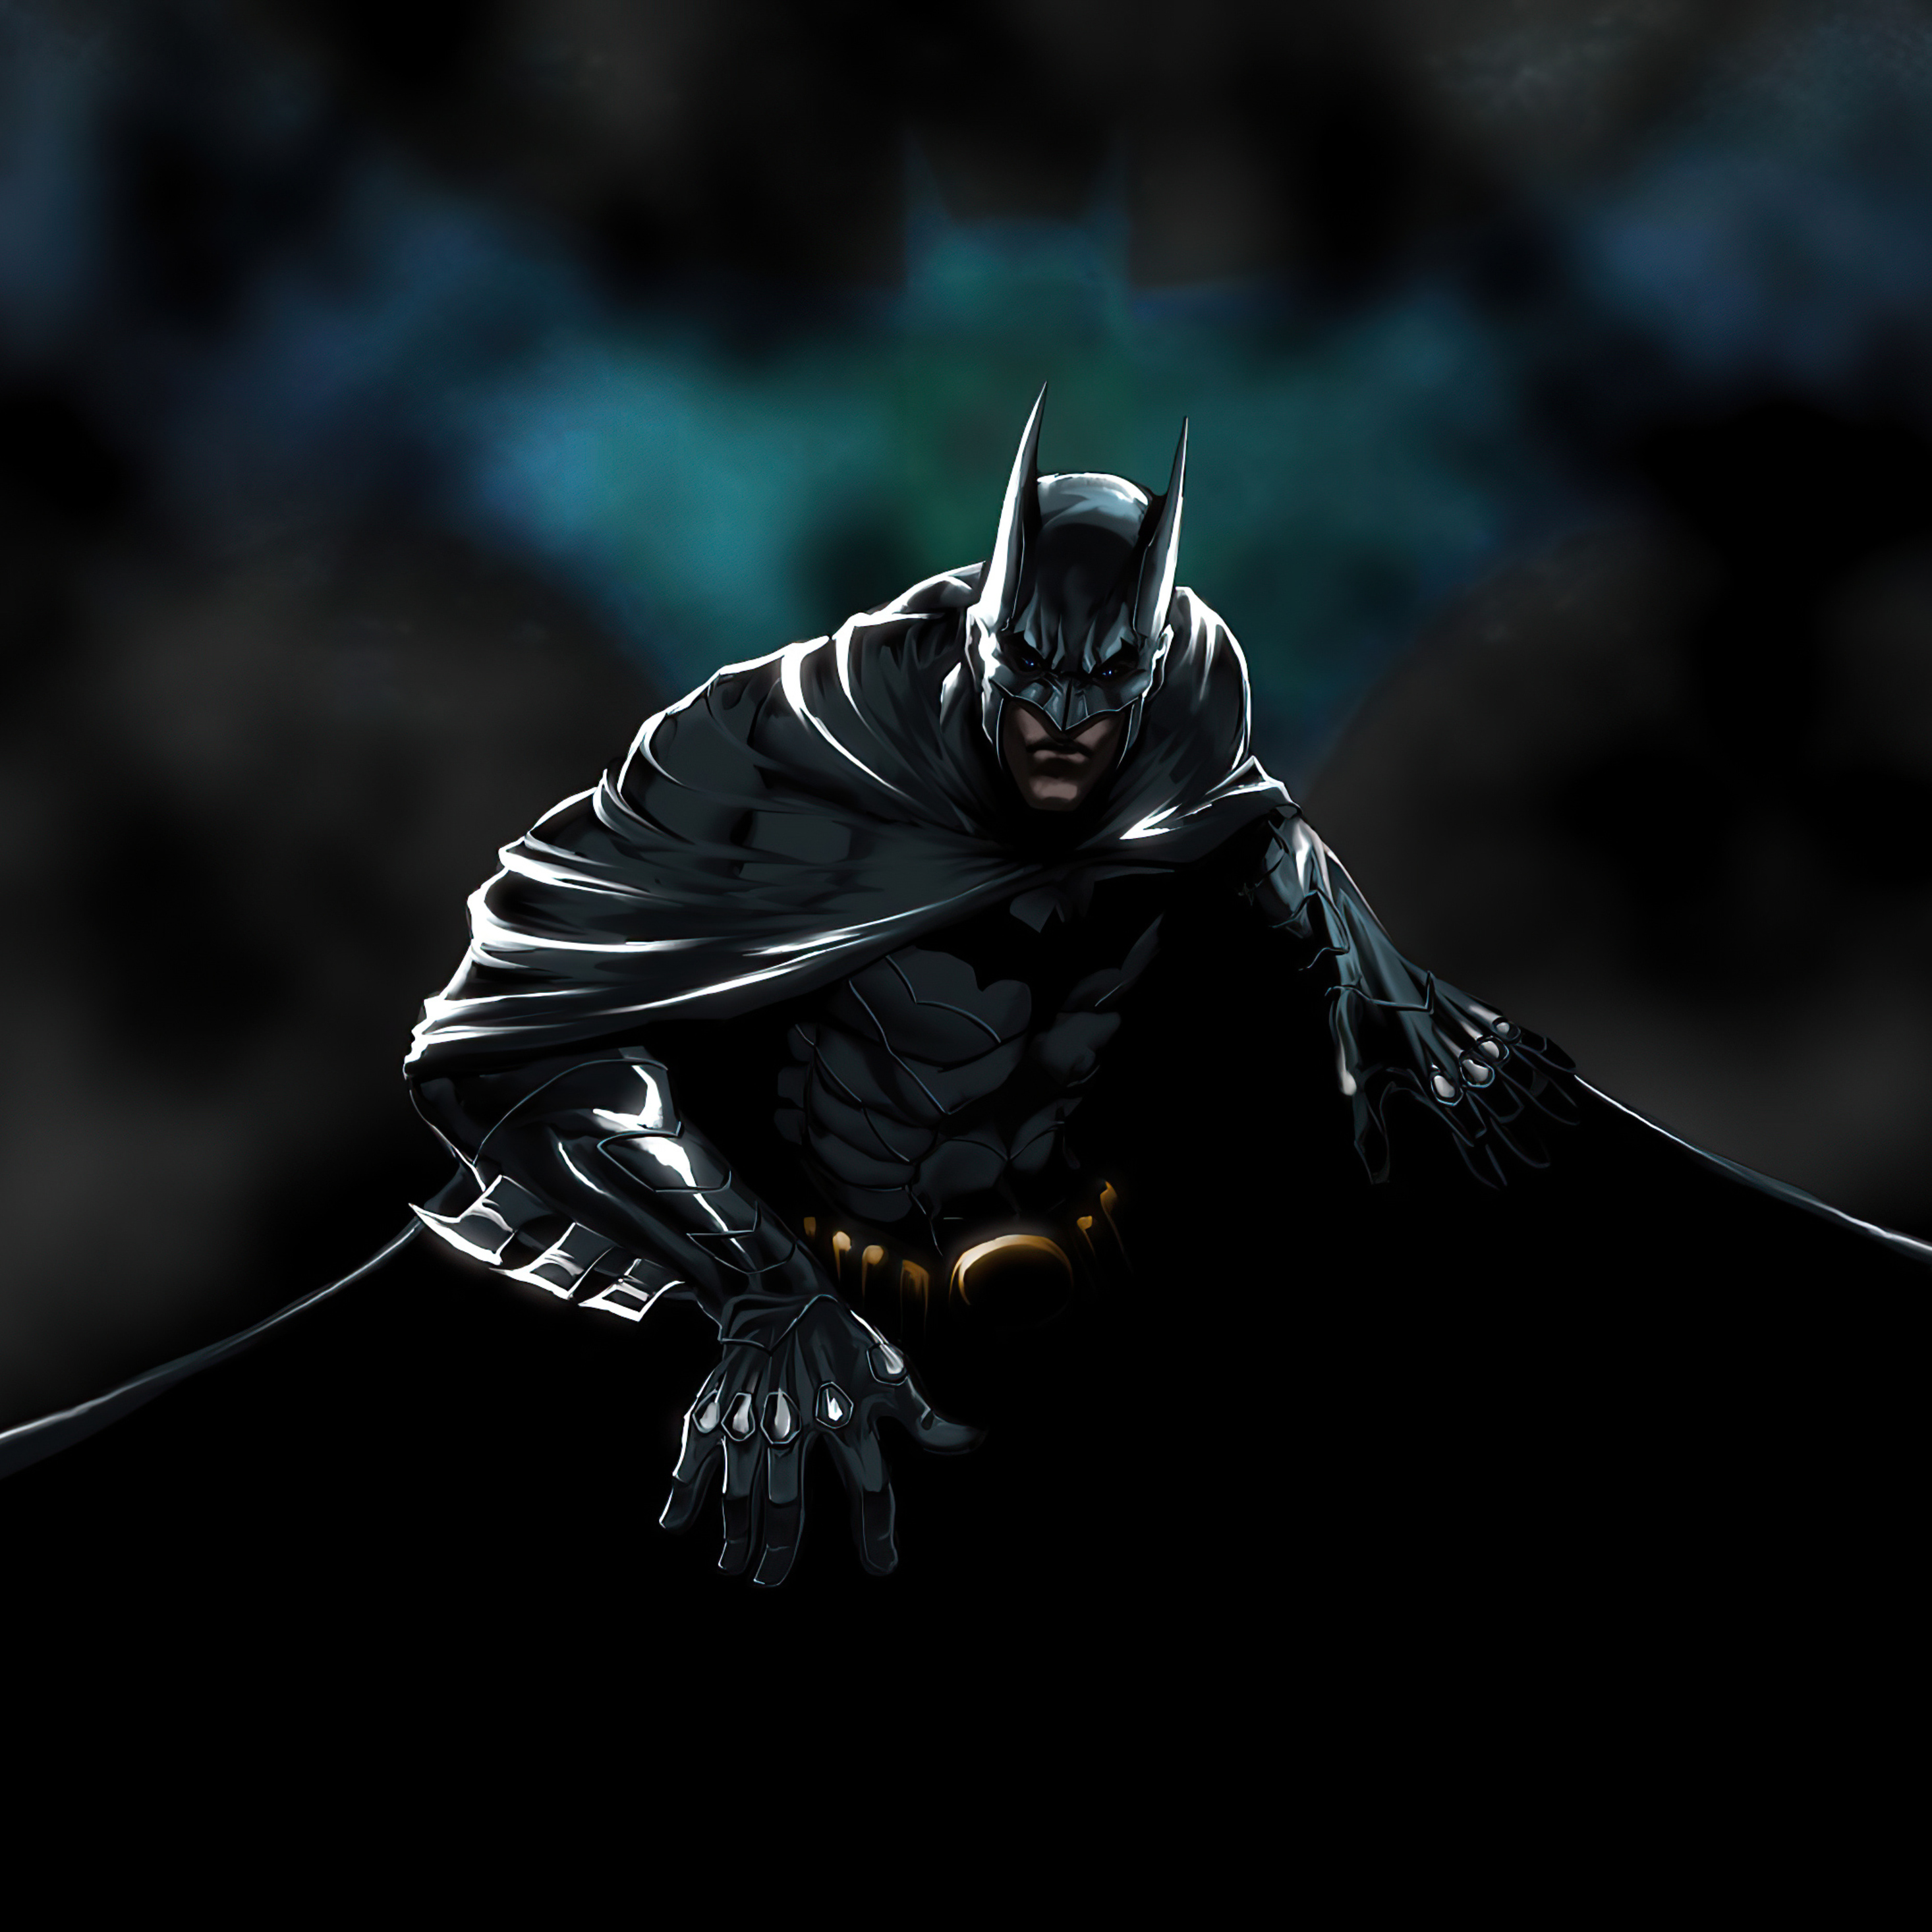 Batman black. Бэтмен. Черный Бэтмен. Бэтмен арт. Бэтмен на темном фоне.